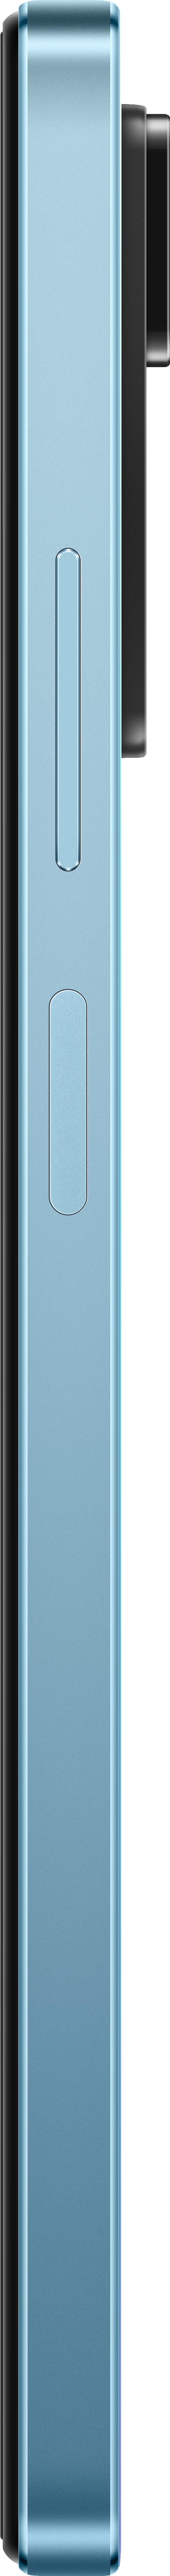 XIAOMI Pro SIM GB Blue Dual 11 Note Star Redmi 128